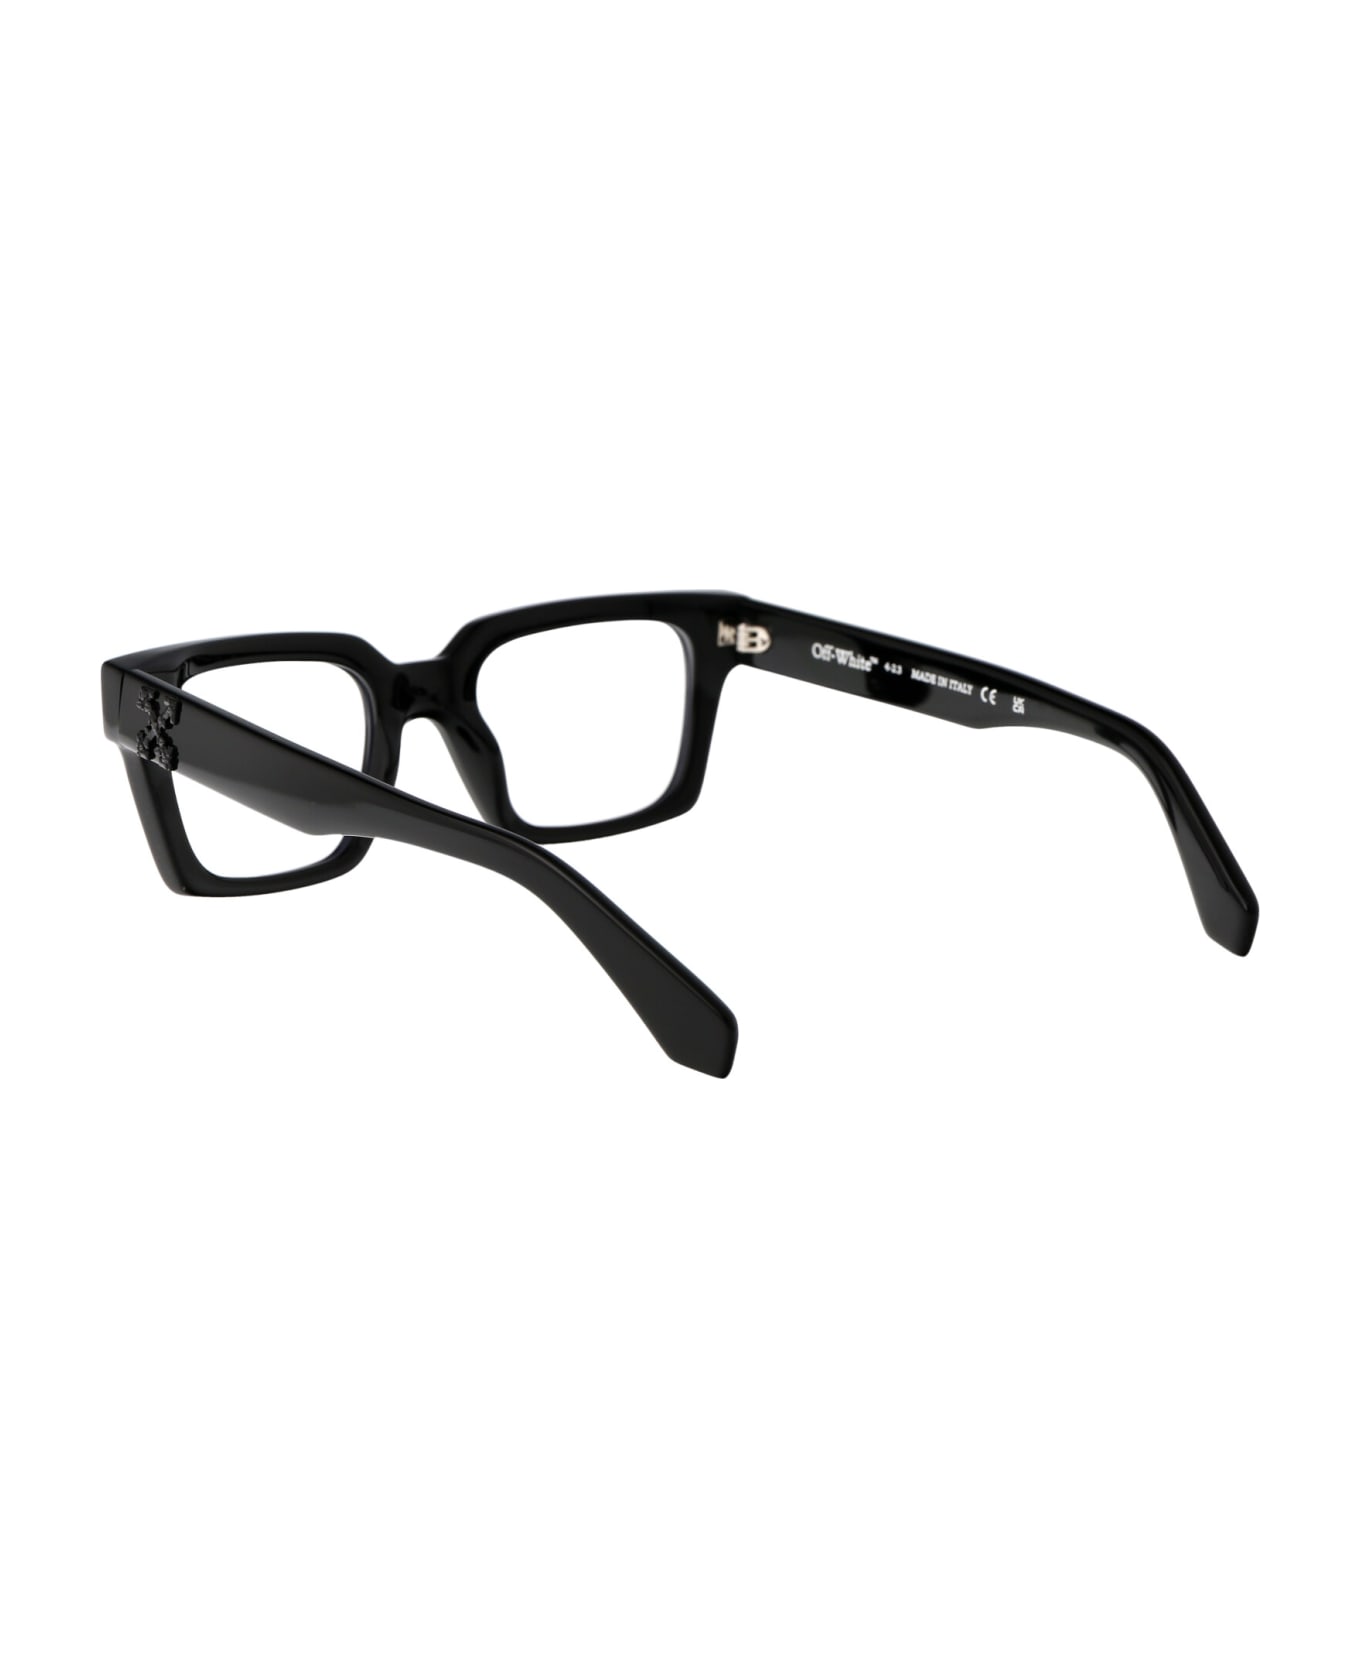 Off-White Clip On Sunglasses - 1025 BLACK RED